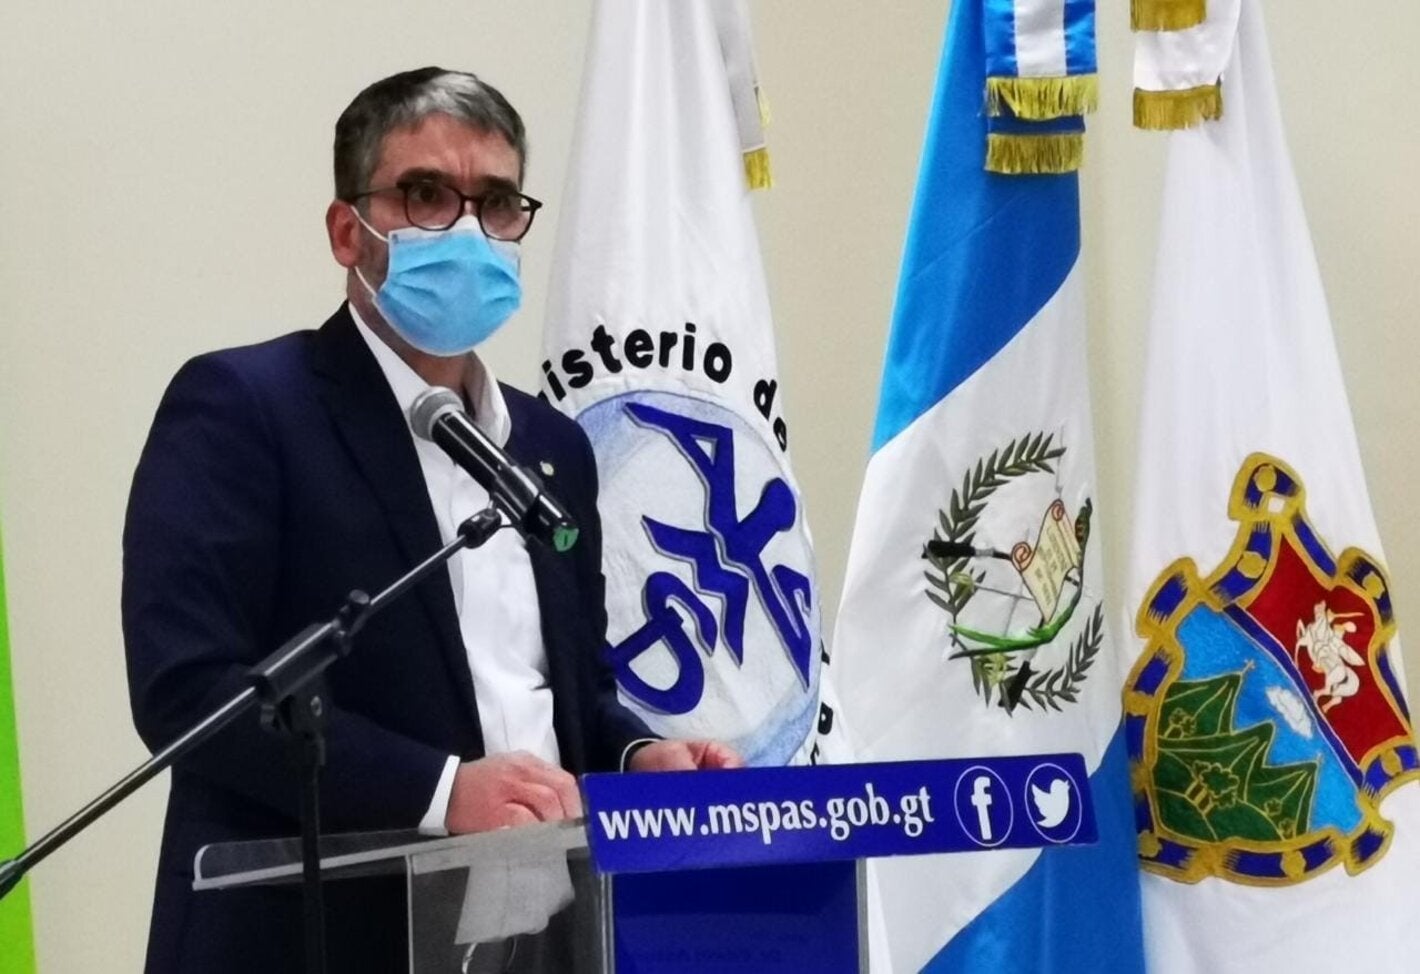 Representante de la OPS/OMS en Guatemala, Oscar Barreneche 